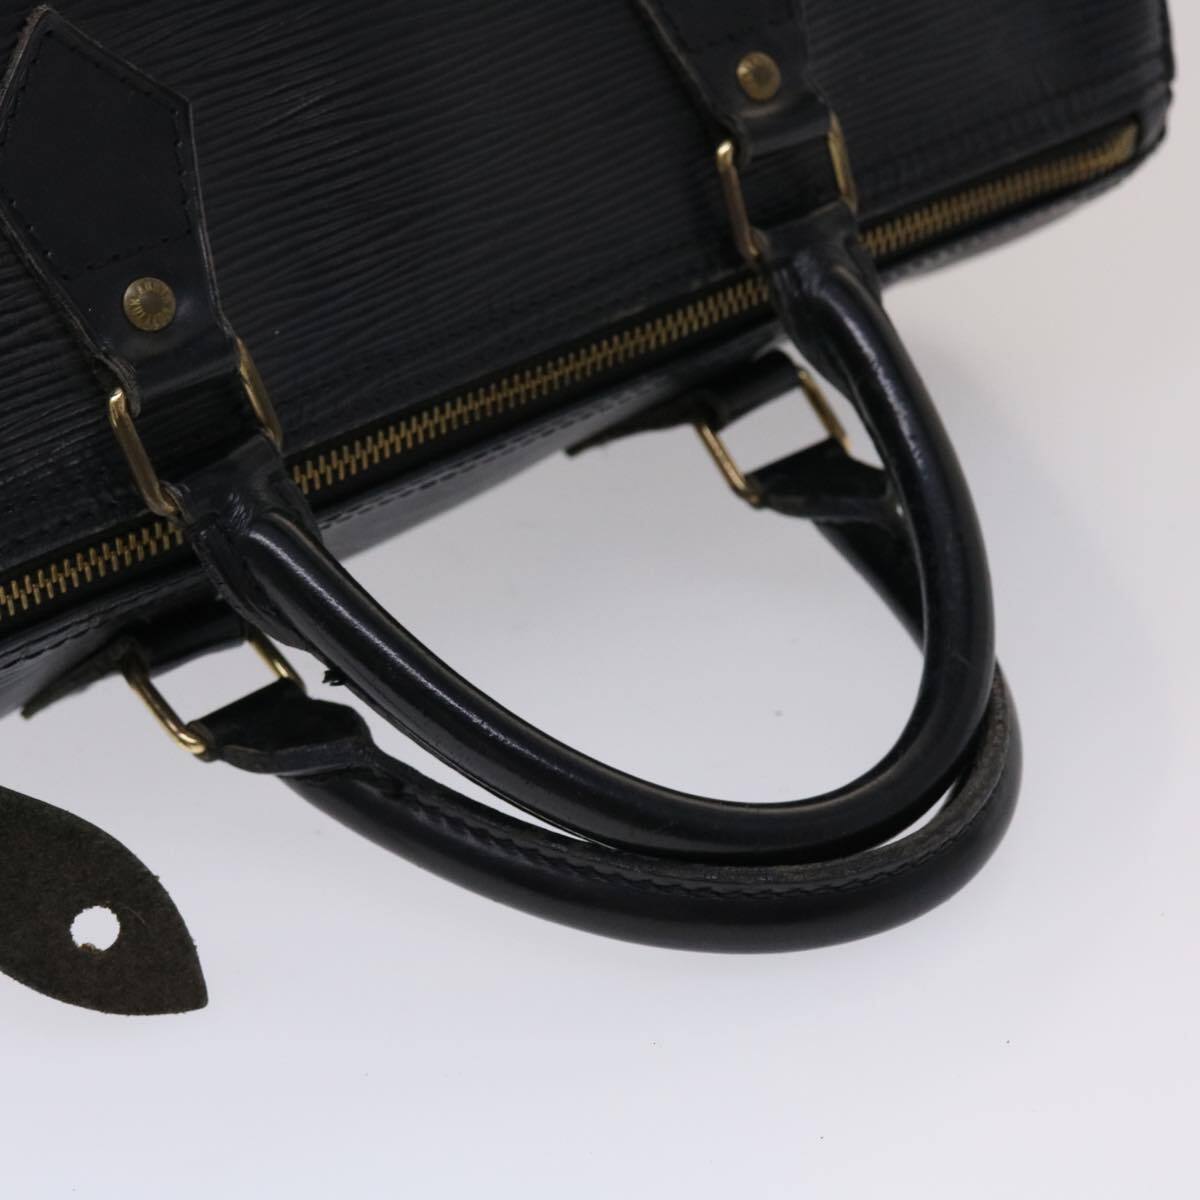 Louis Vuitton Epi Speedy 30 Black Bag - Satchel